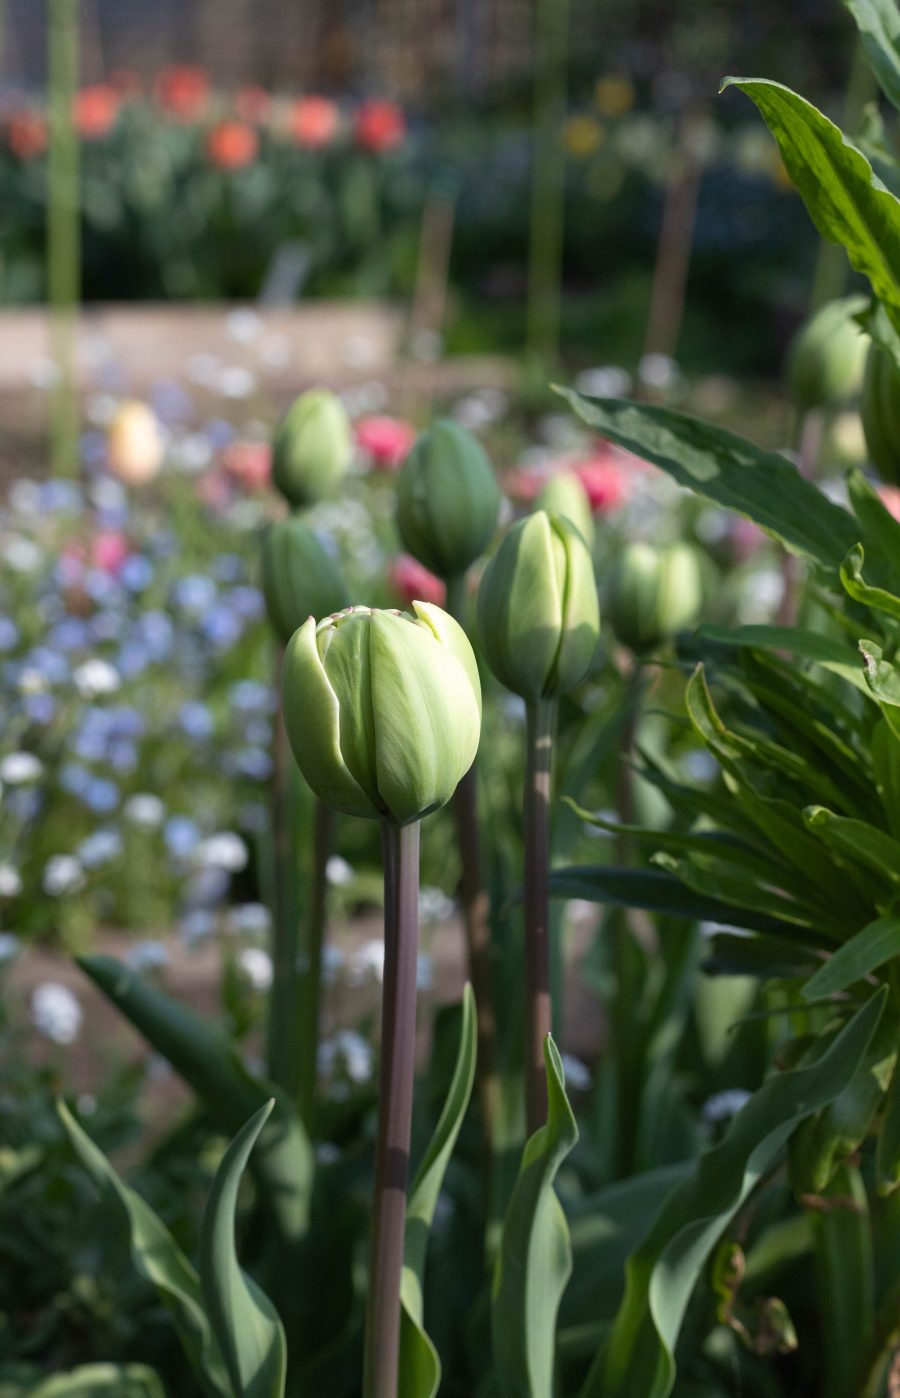 tulips in bud